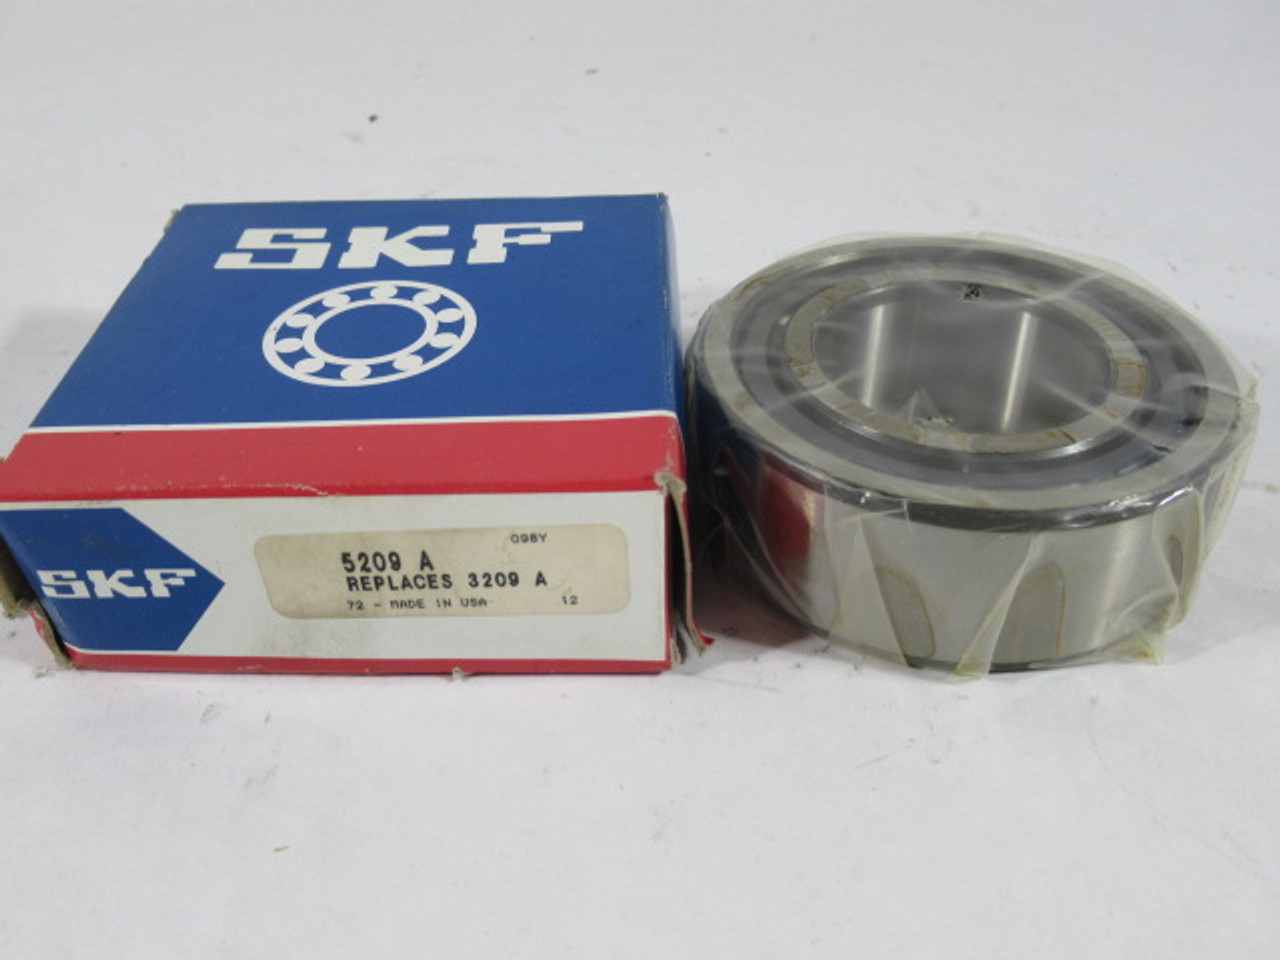 SKF 5209-A Double Row Angular Bearing 85x45x30.2mm ! NEW !